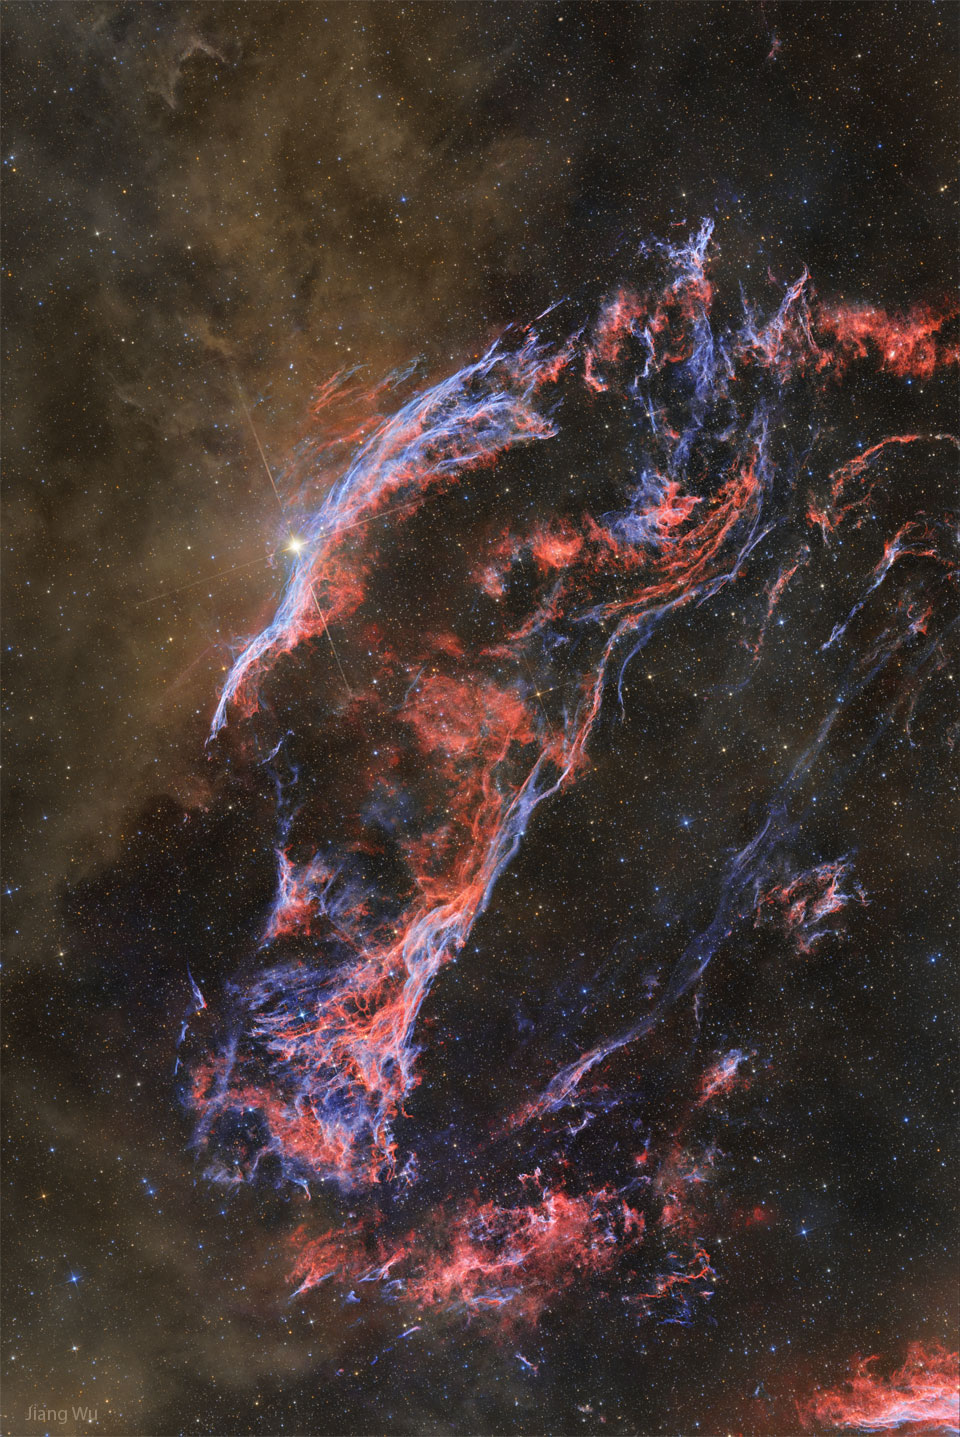 Dust and the Western Veil Nebula